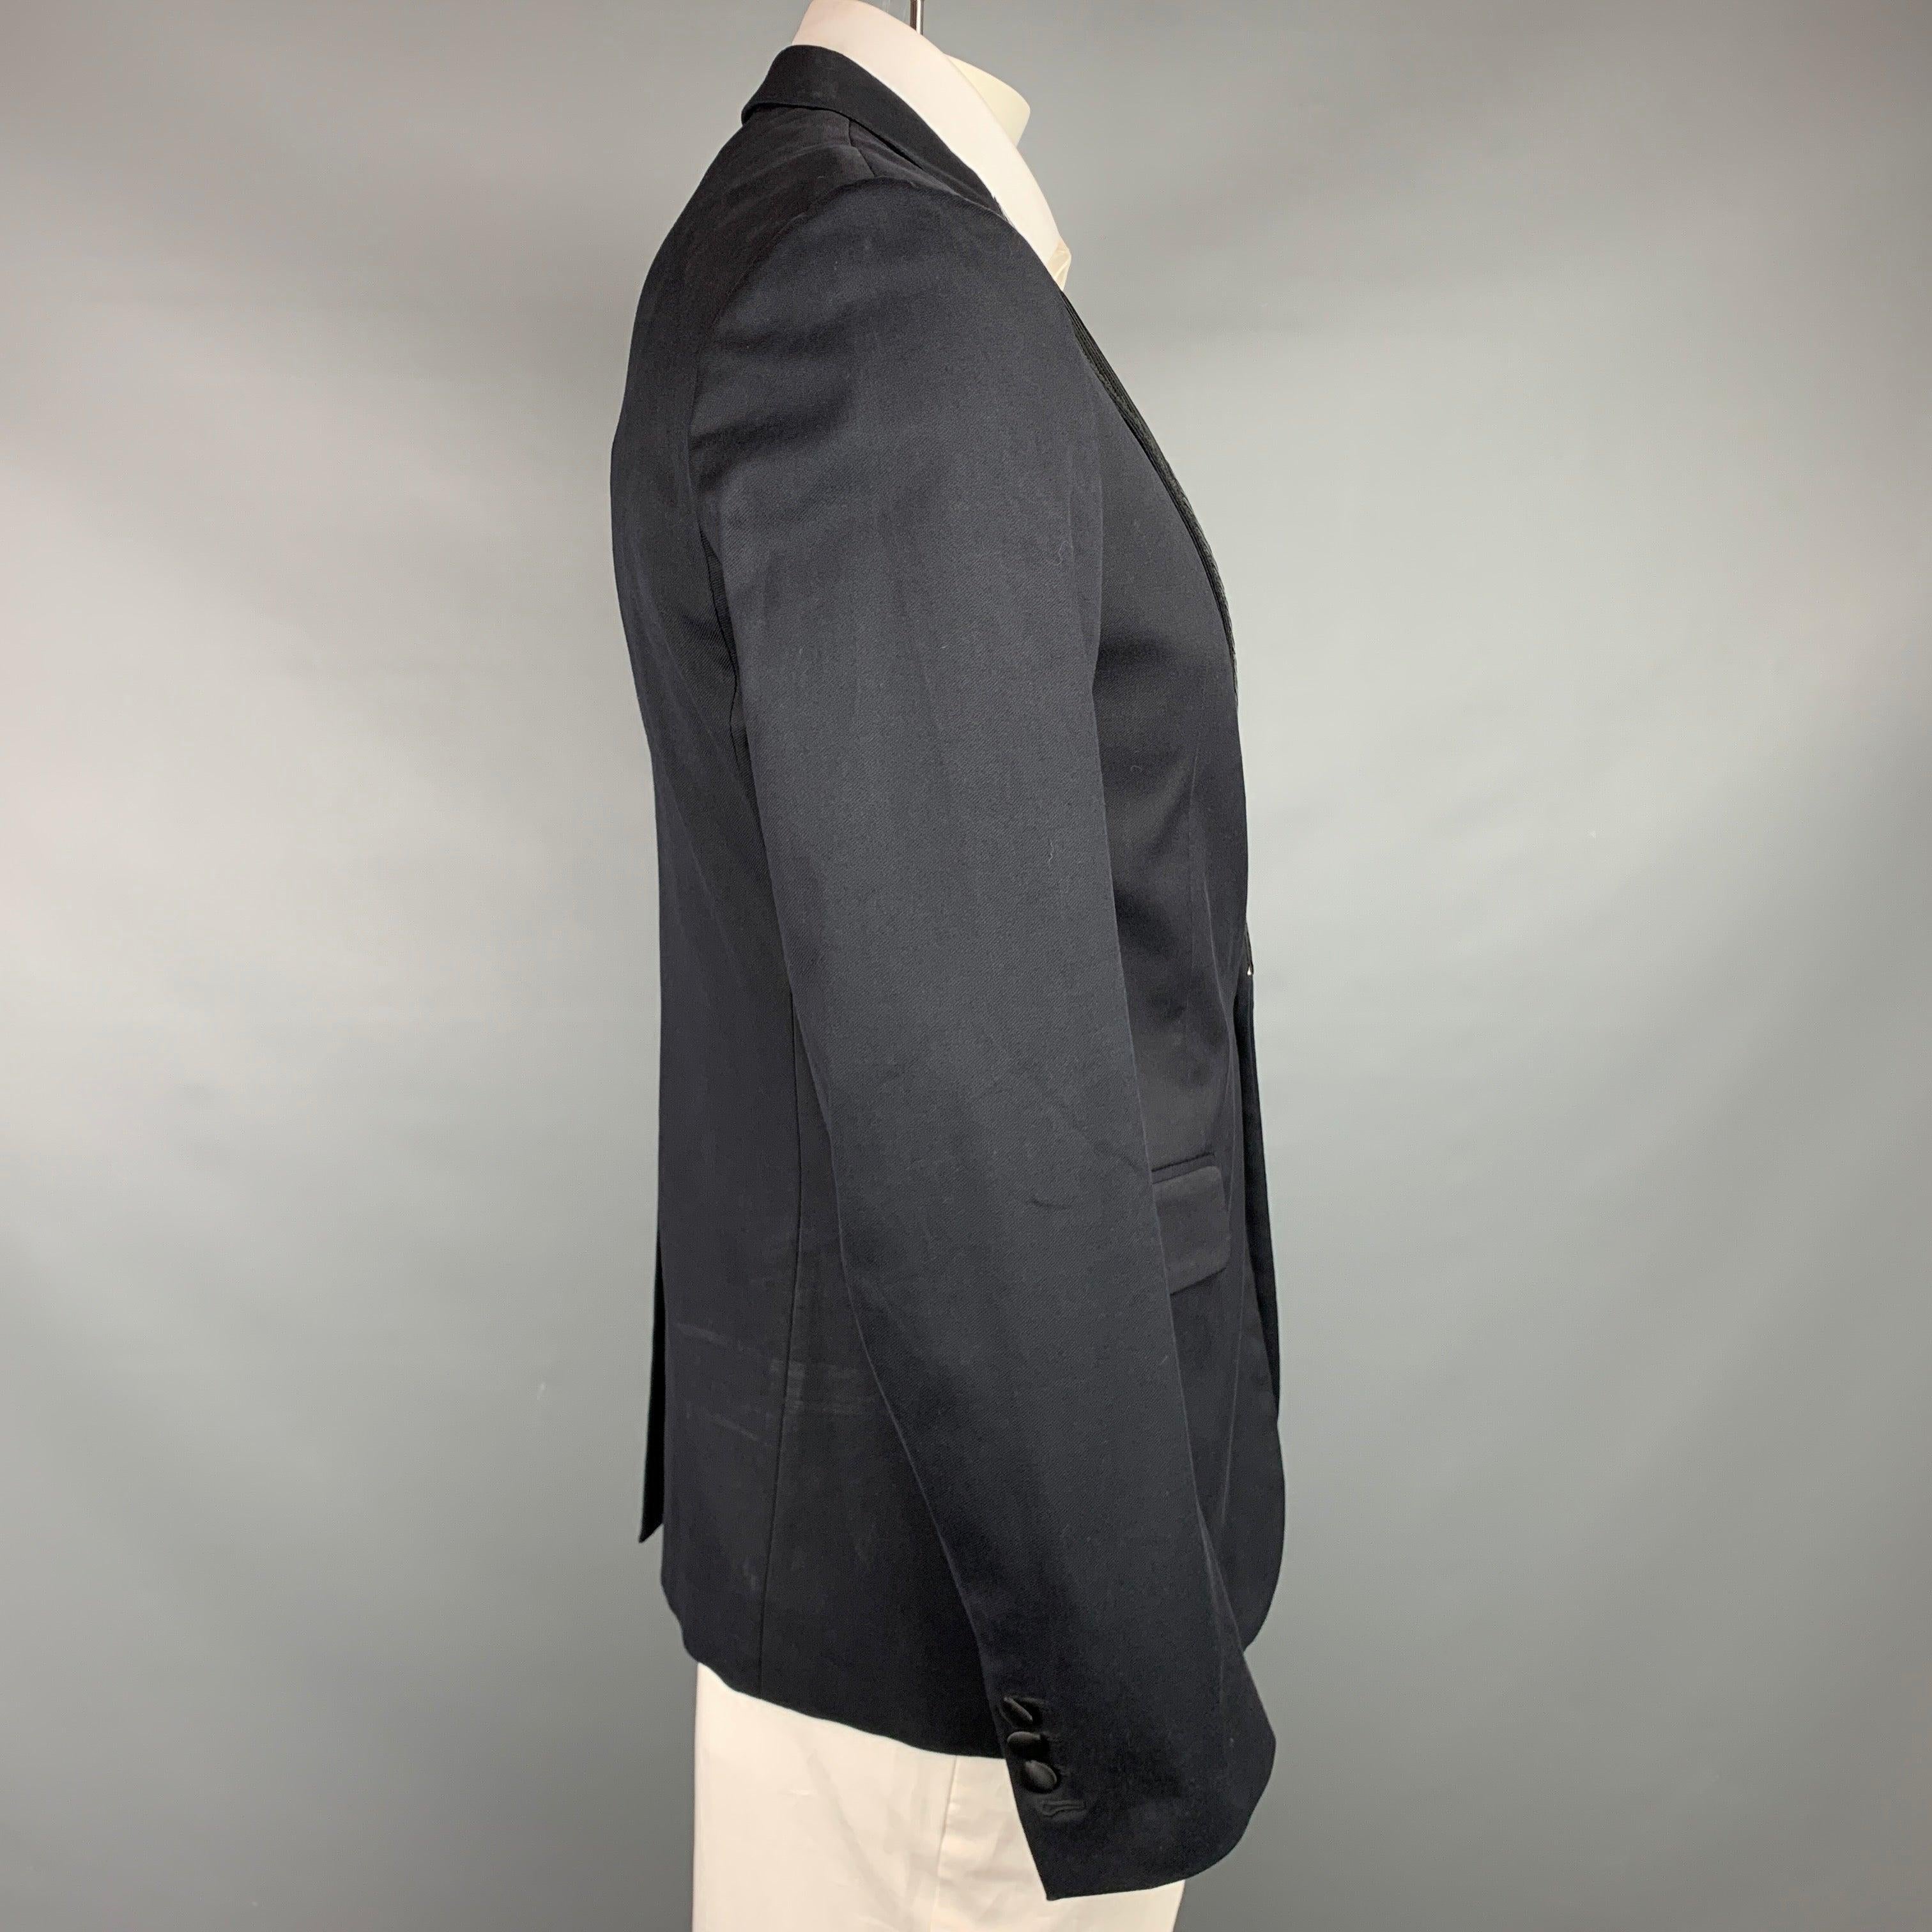 DSQUARED2 Size 42 Black Applique Cotton Peak Lapel Sport Coat In Good Condition For Sale In San Francisco, CA